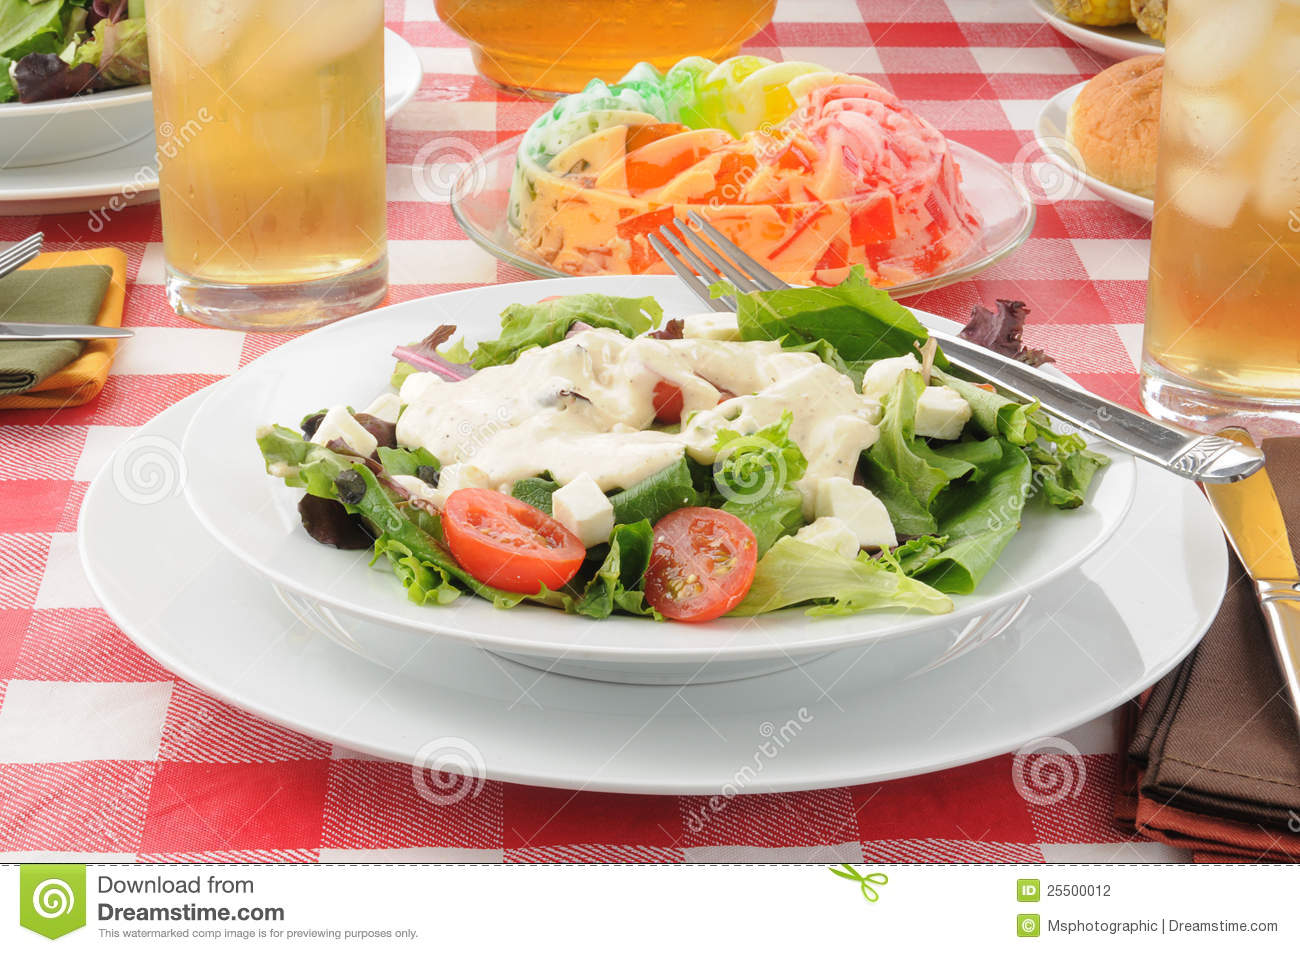 Salad And A Gelatin Fruit Parfait Stock Photography   Image  25500012